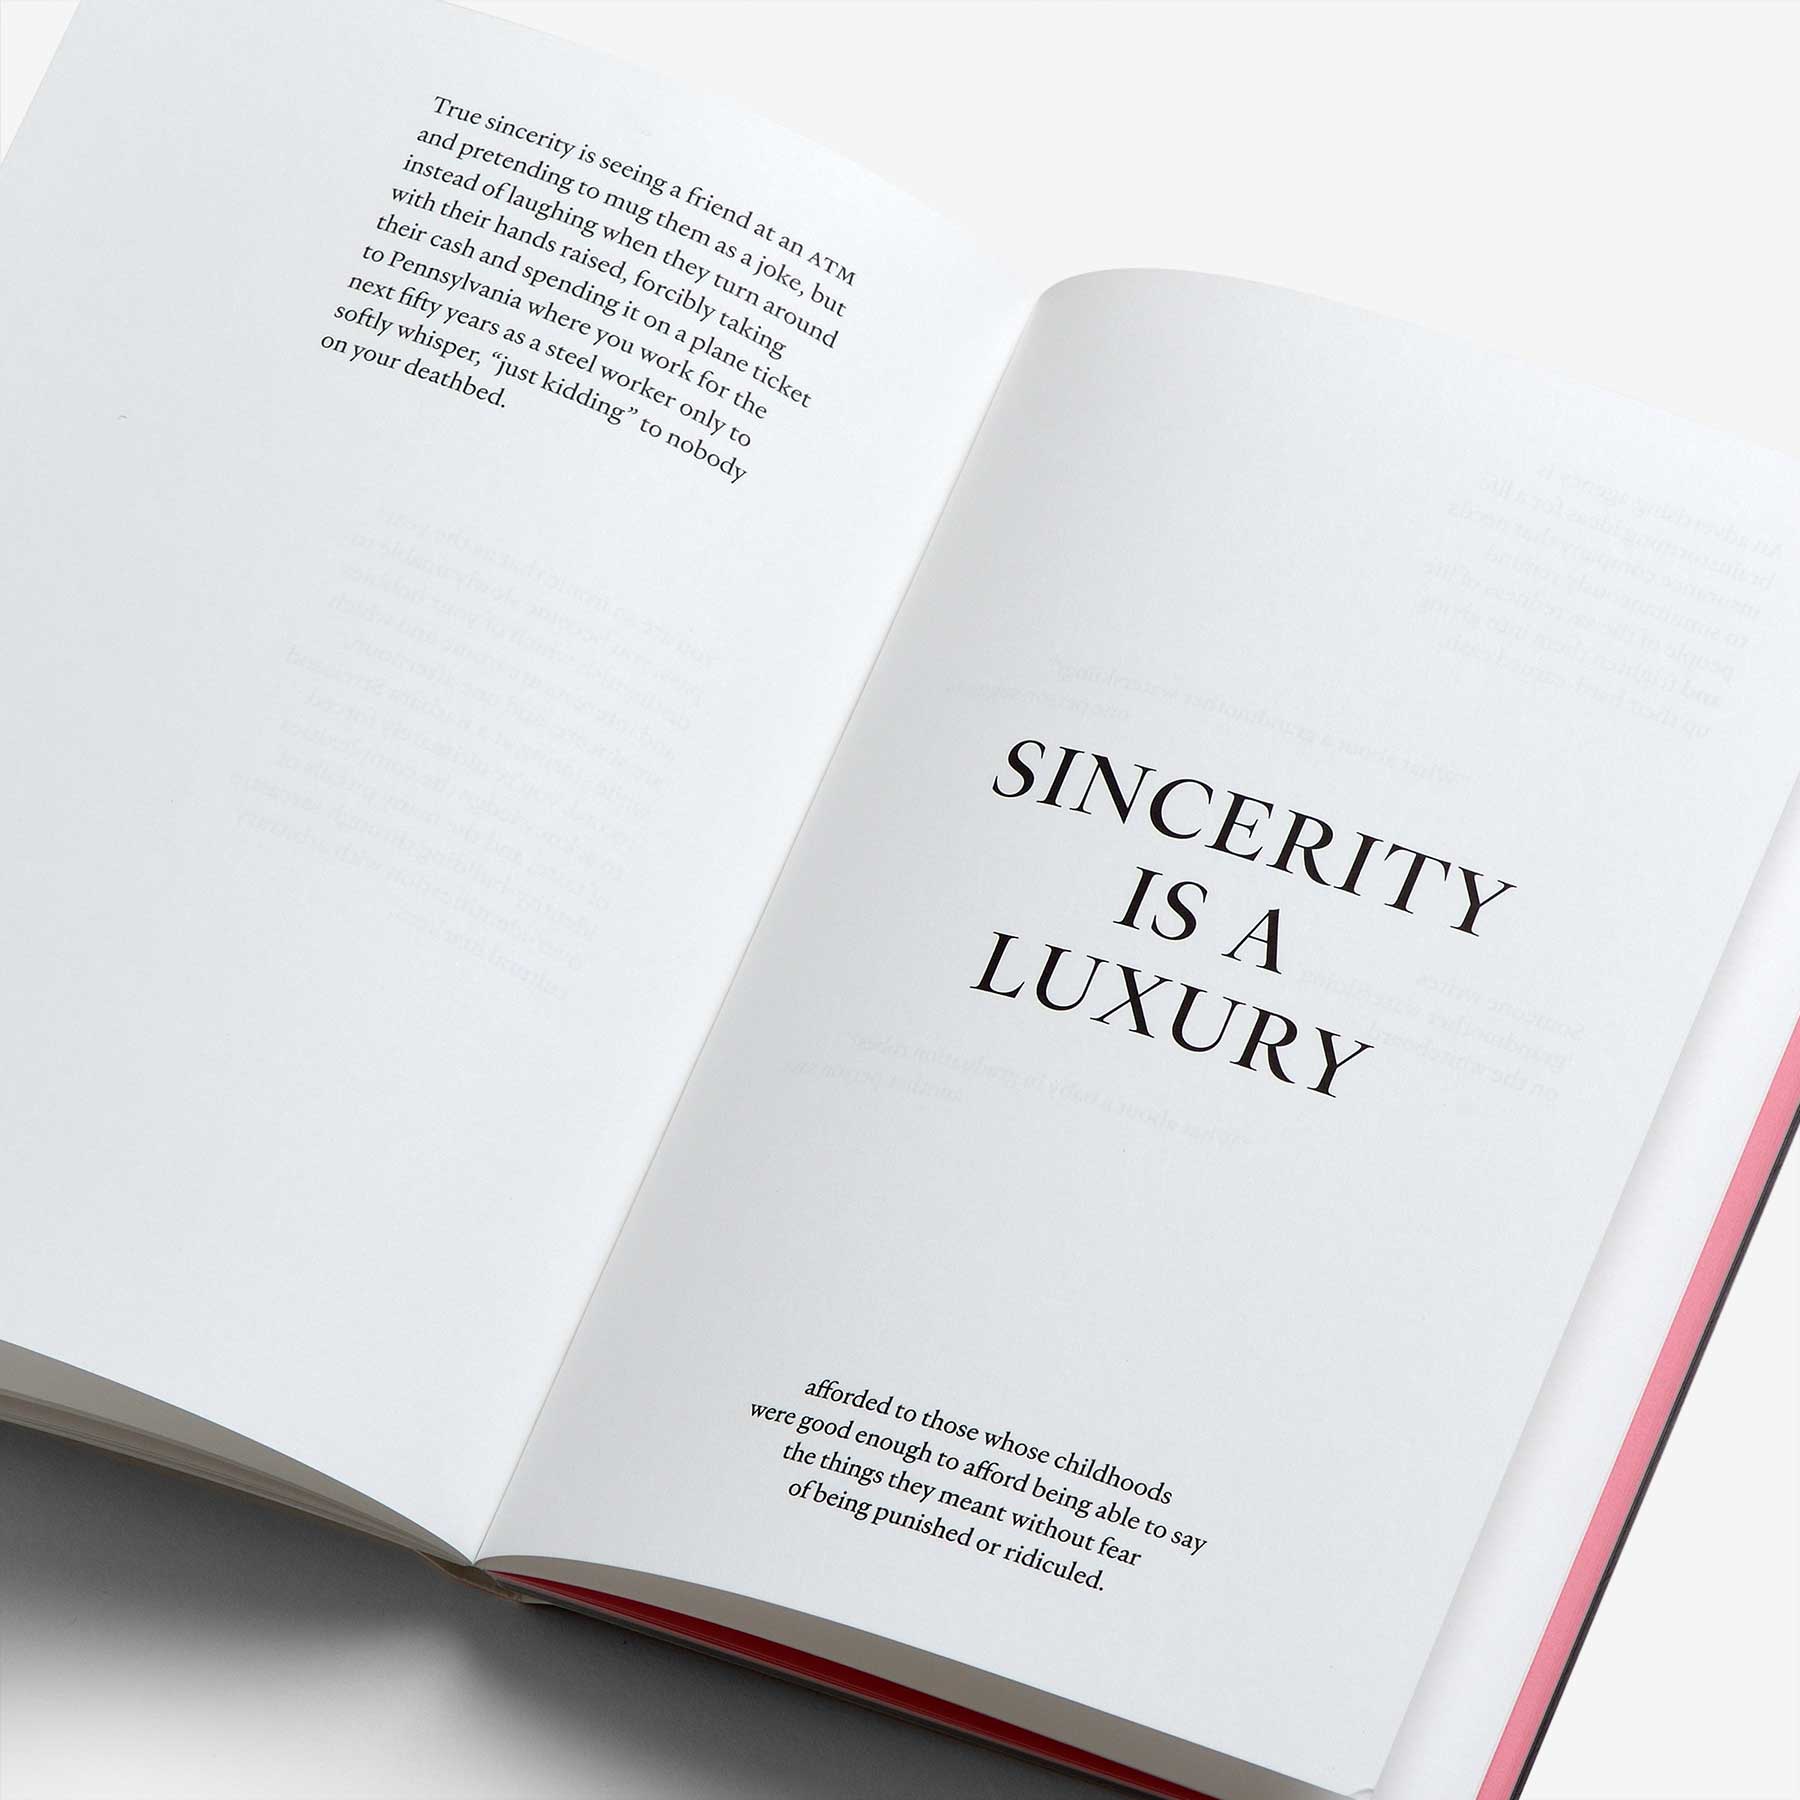 Sincerity/Irony Heldane Specimen Book